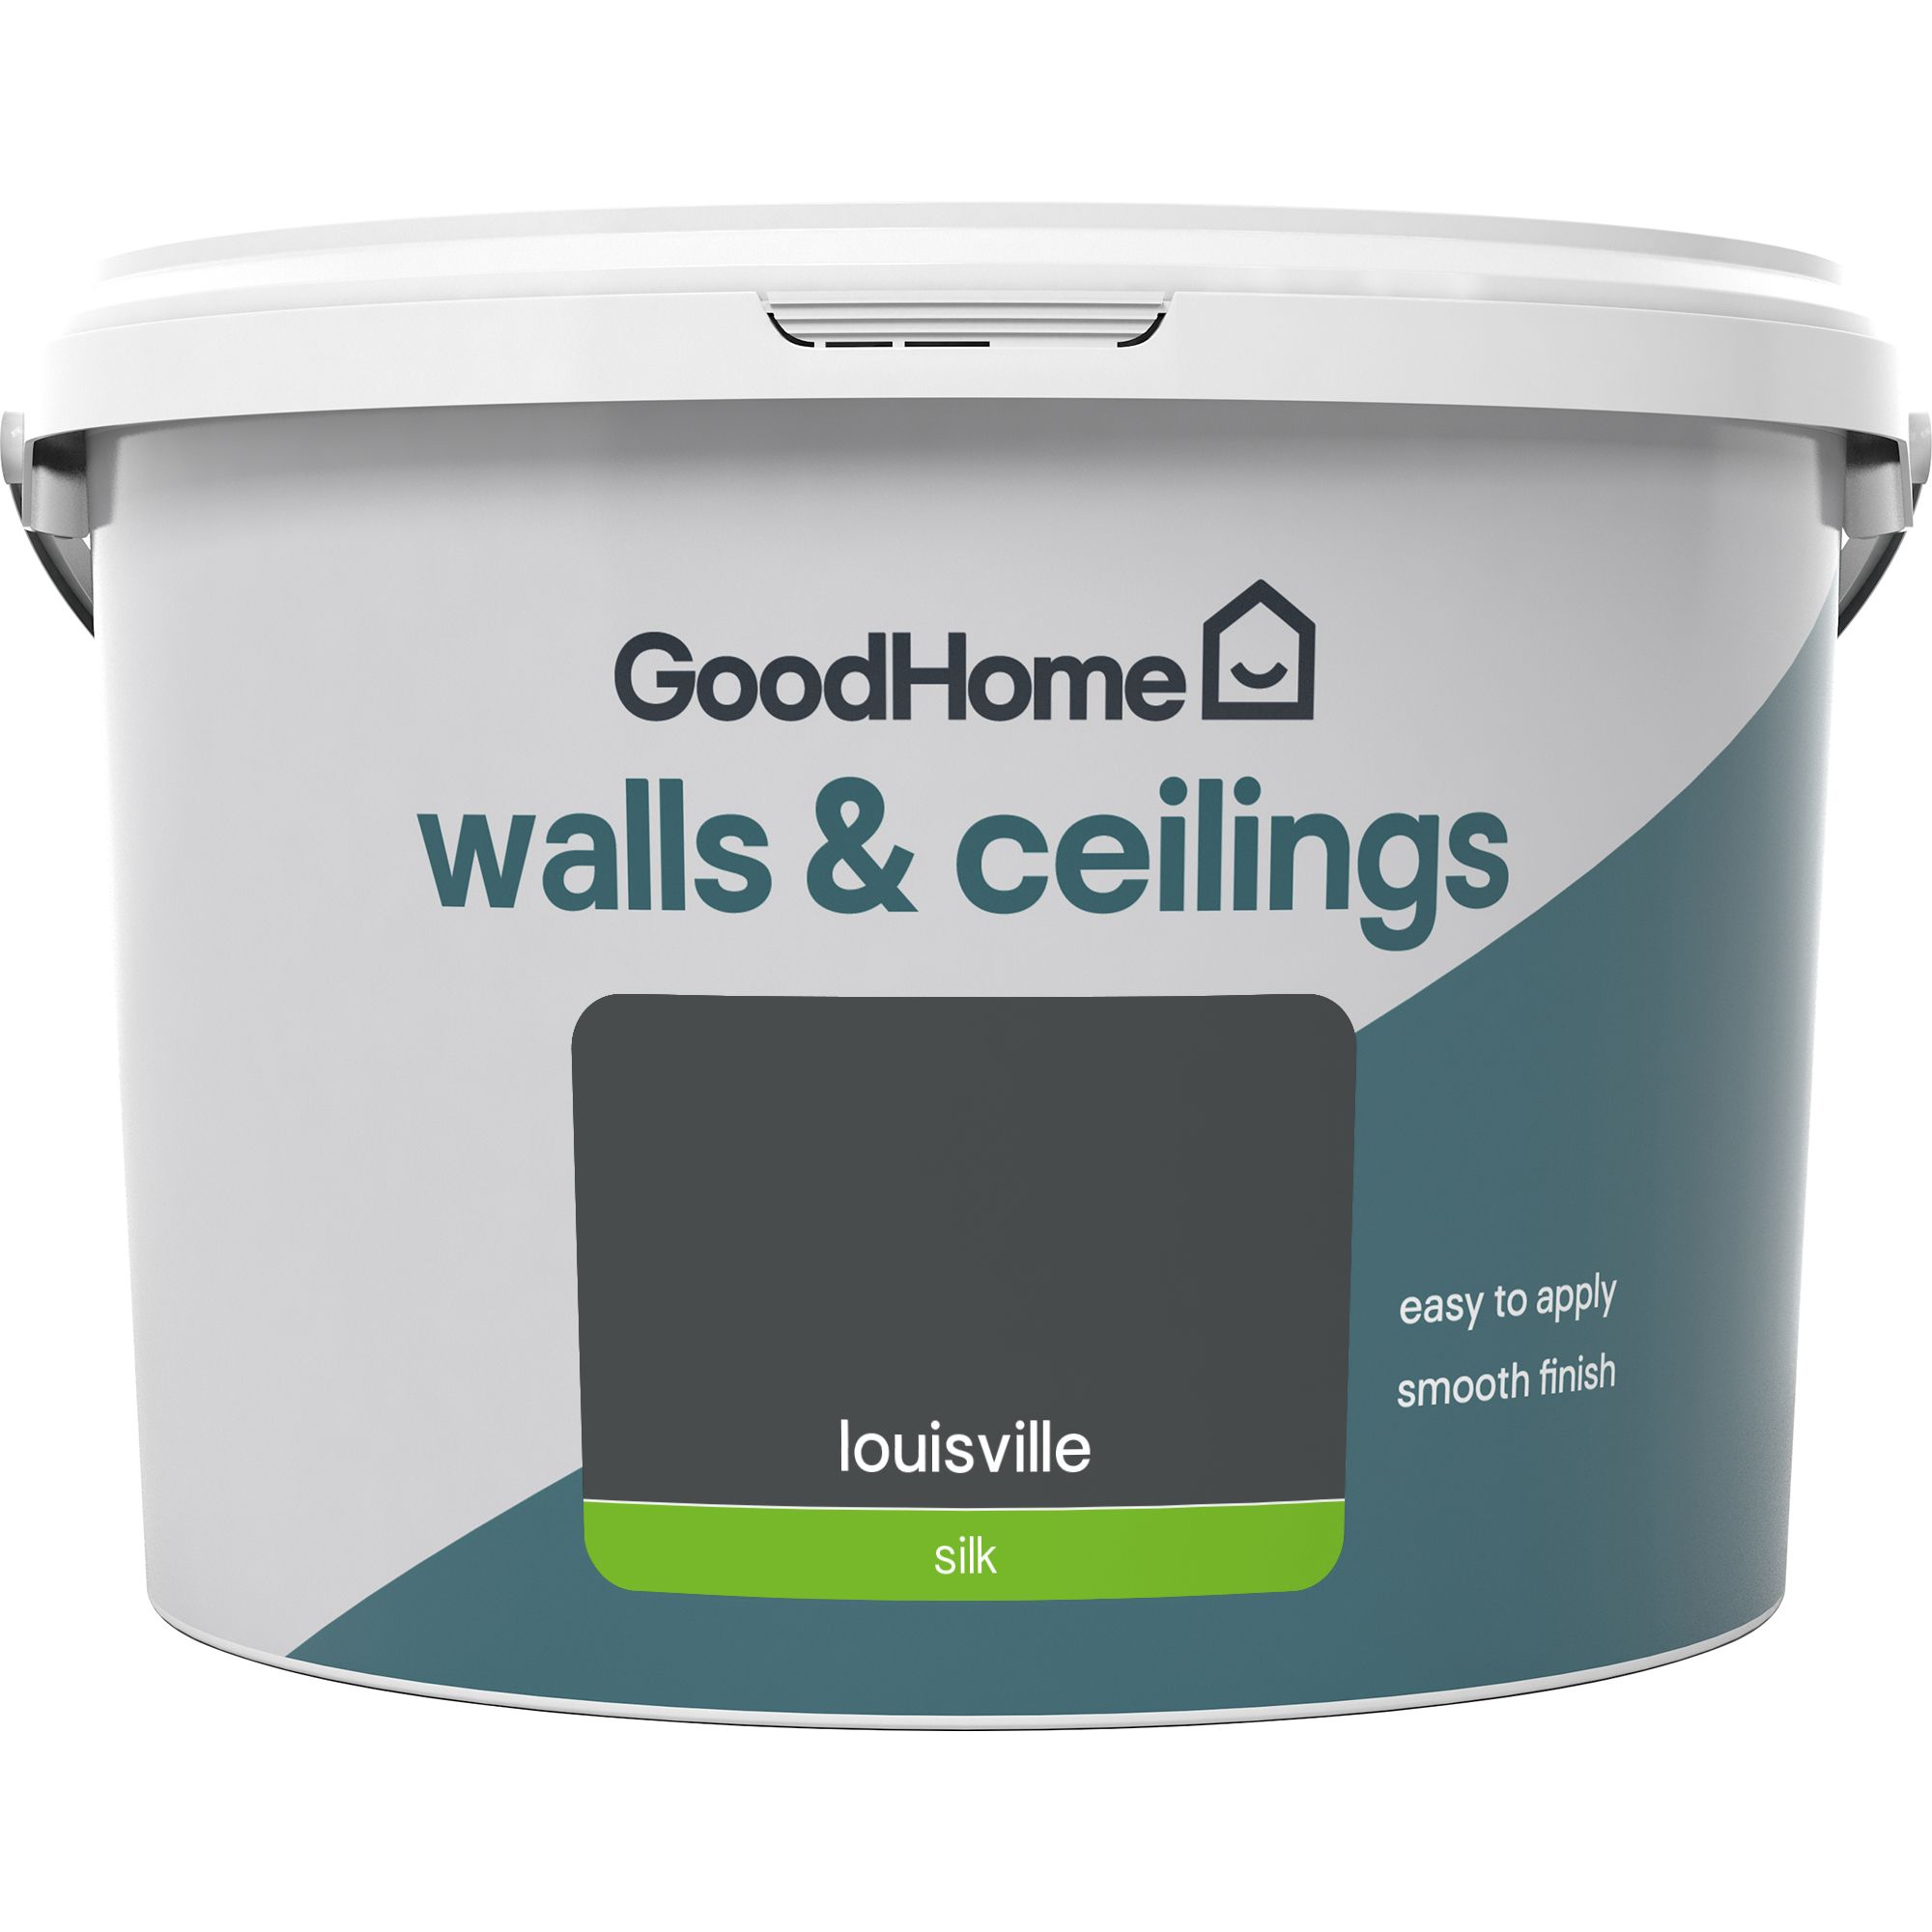 GoodHome Walls & ceilings Louisville Silk Emulsion paint, 2.5L